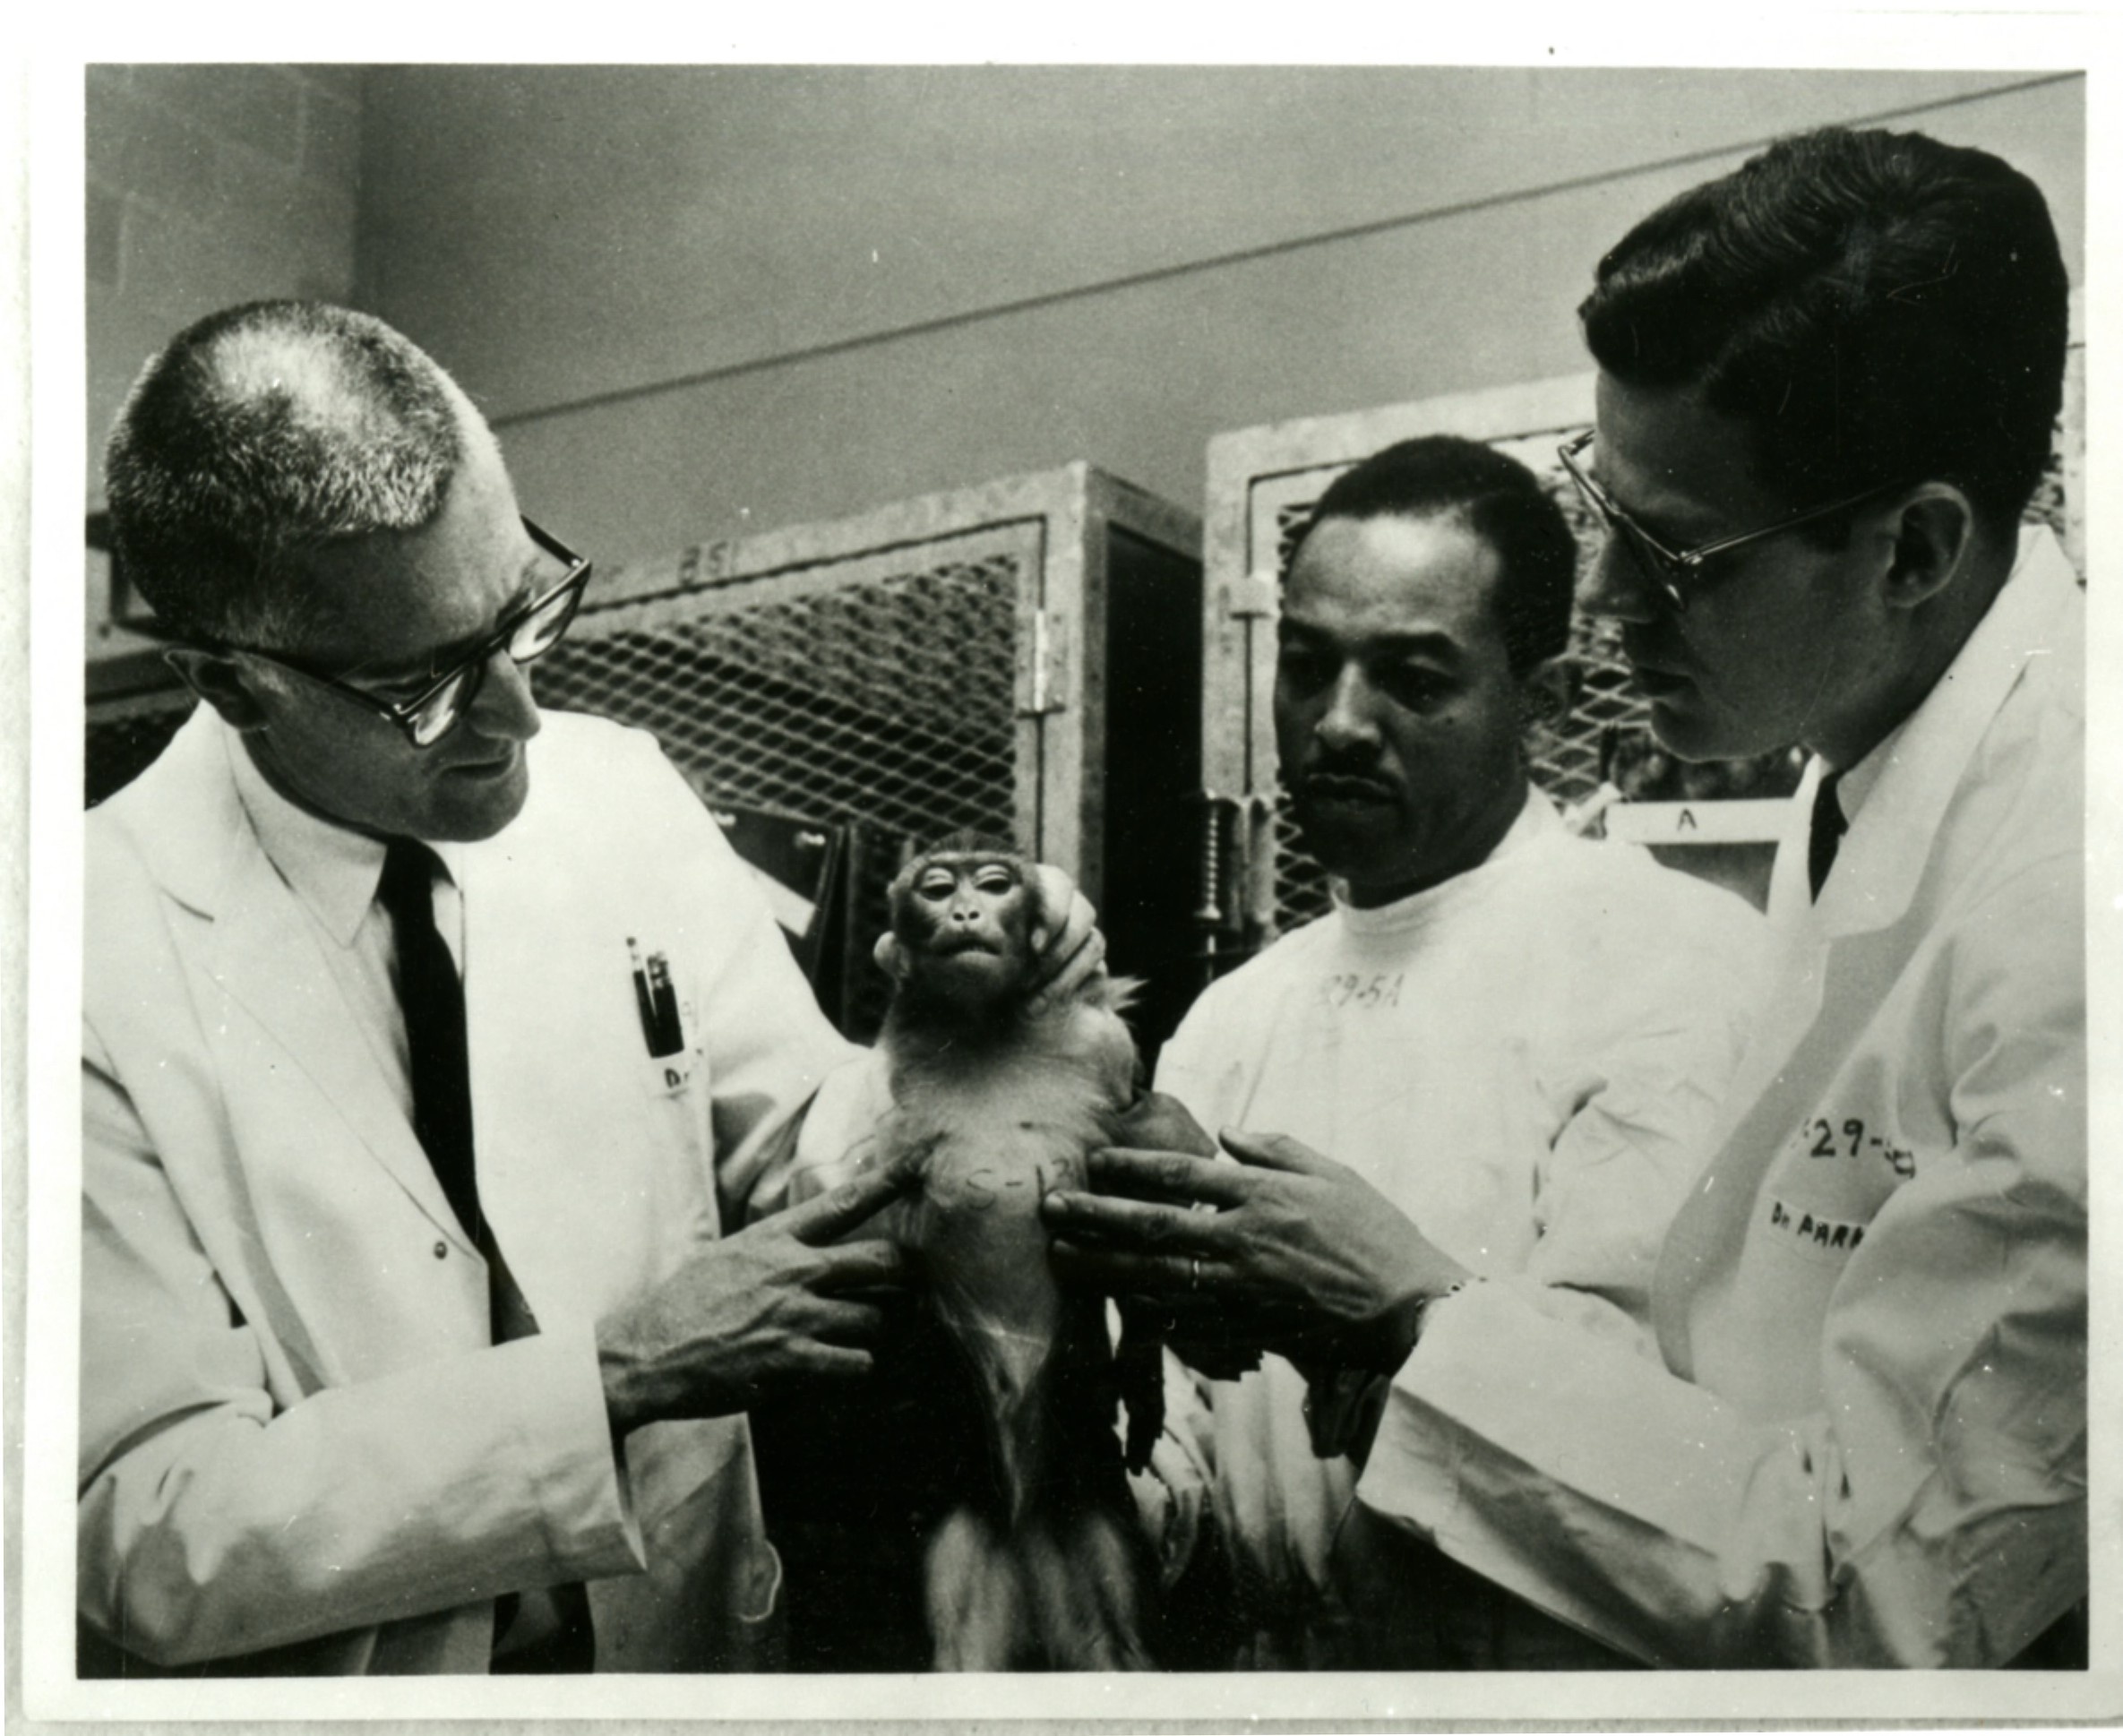 Three people in lab coats examine a monkey